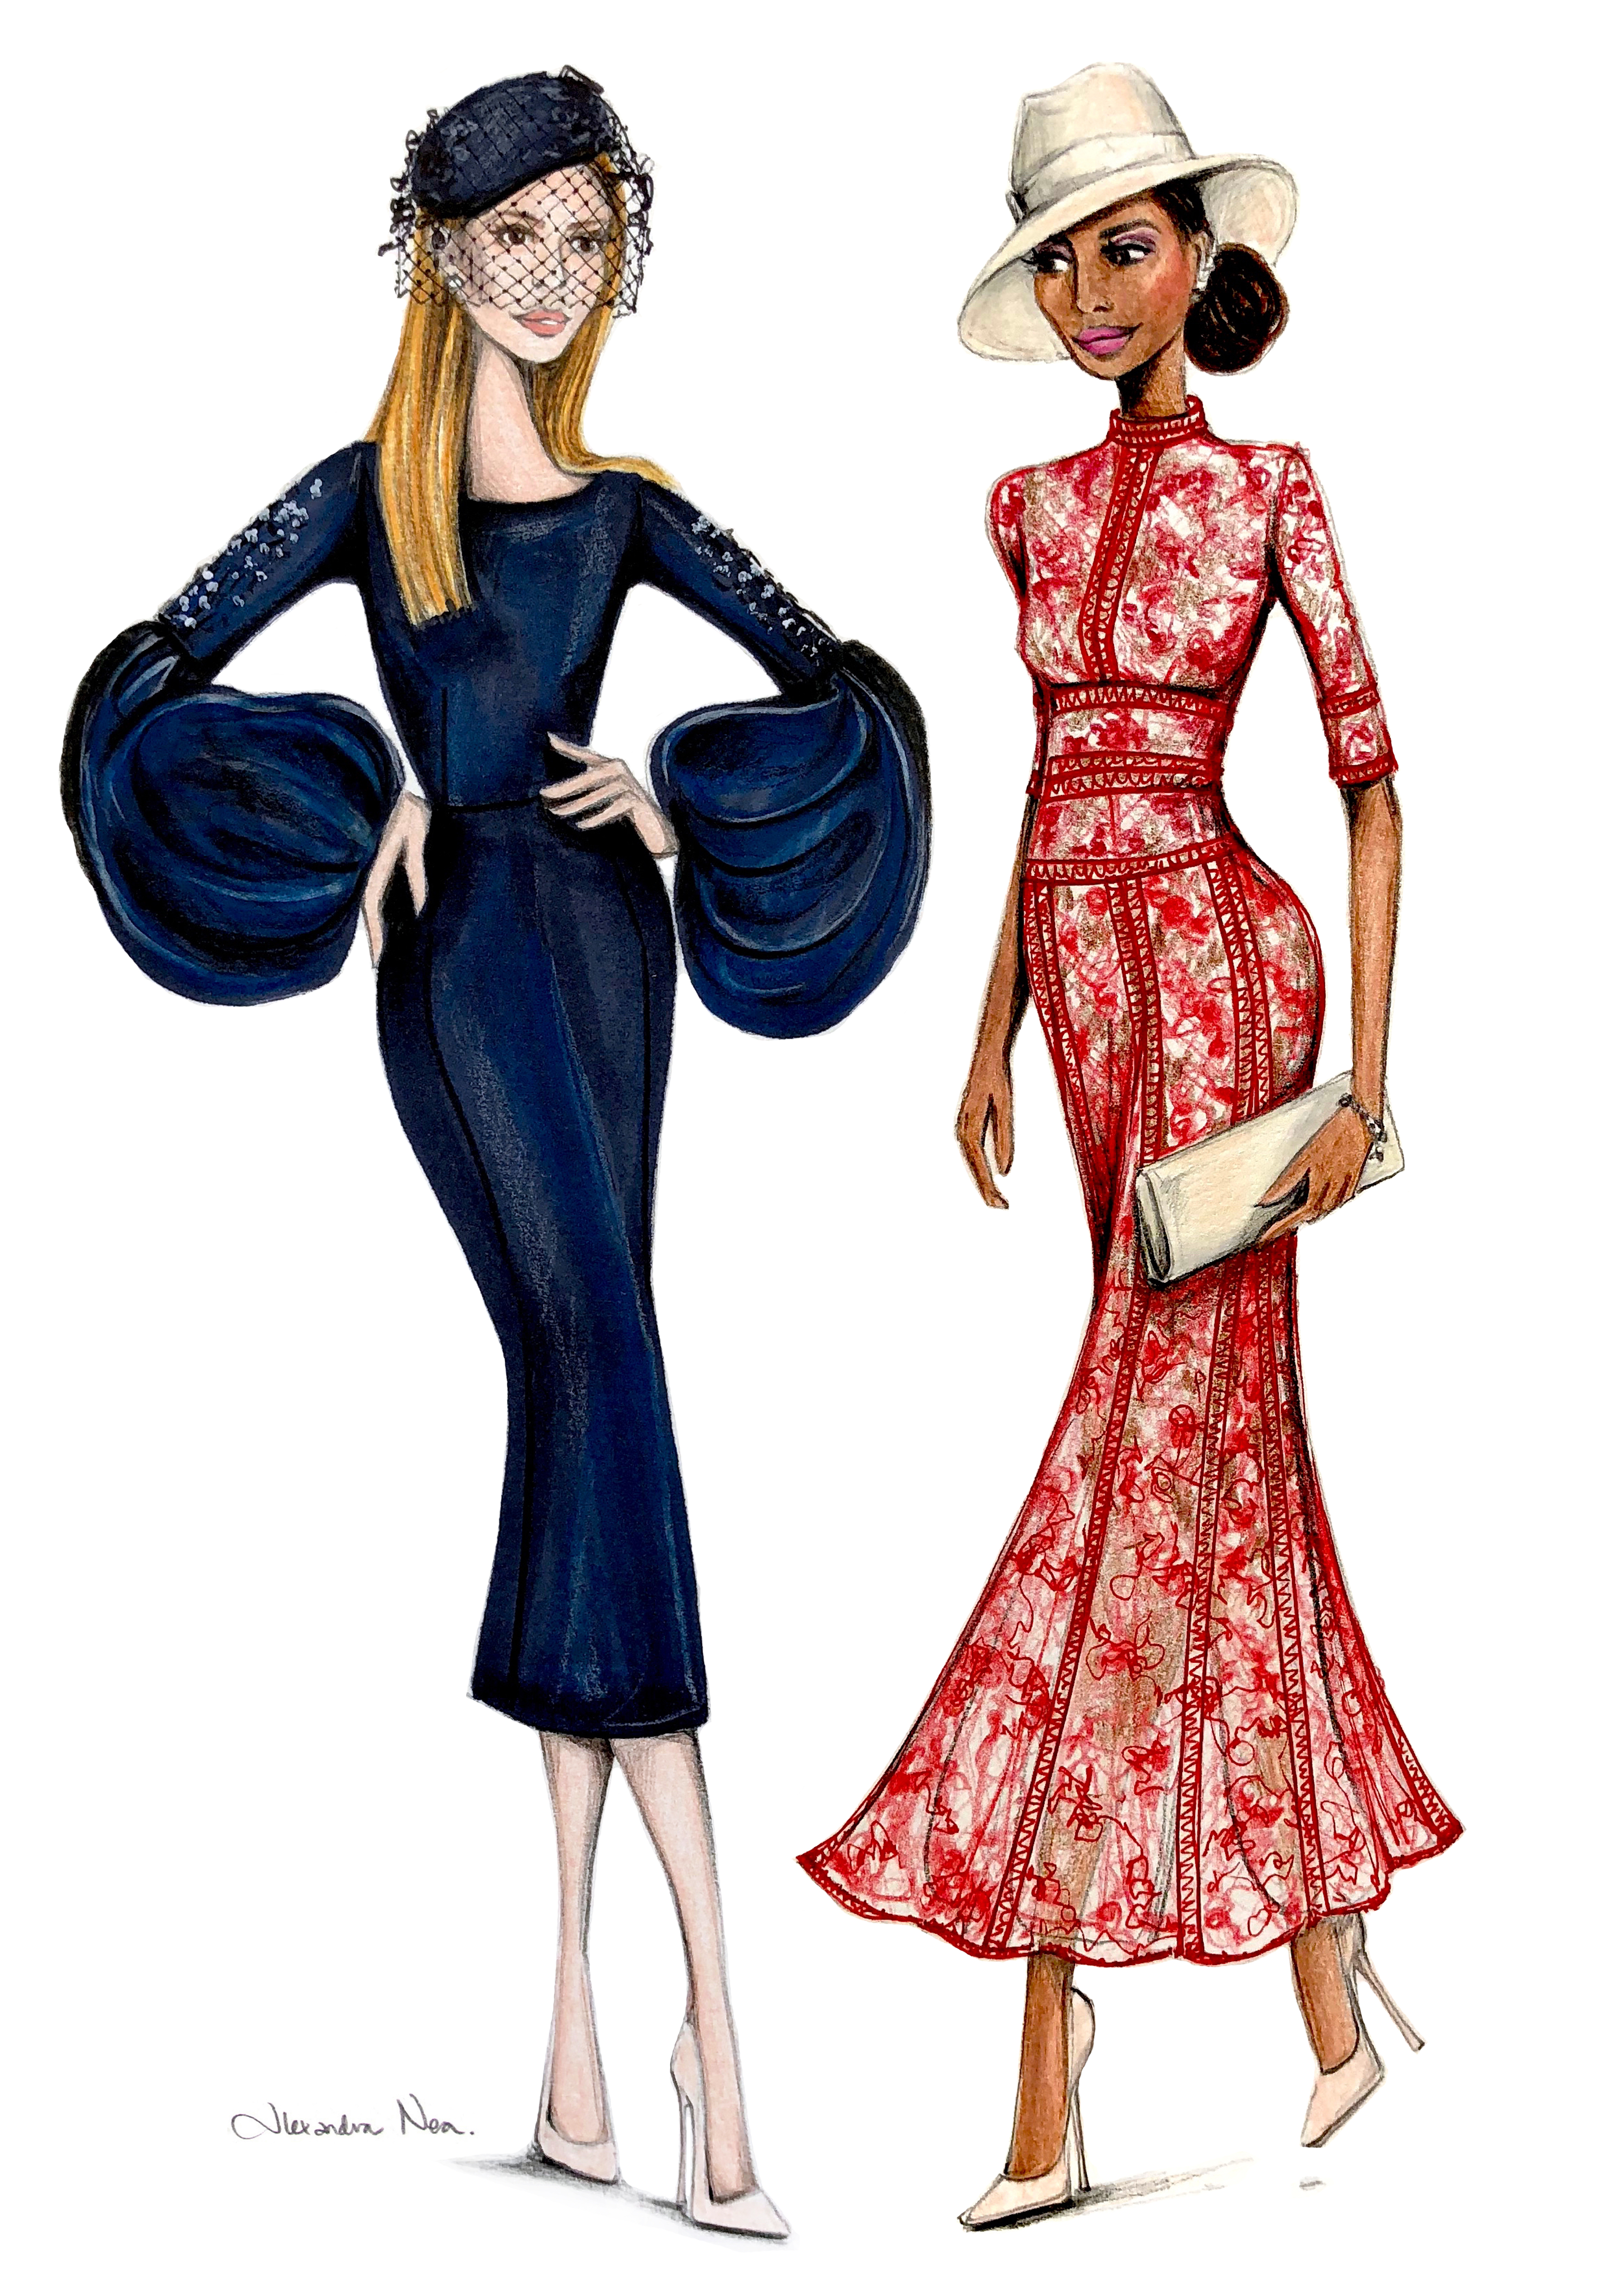 Illustration of royal wedding guests Sarah Rafferty and Gina Torres created by illustrator Alexandra Nea (Alexandra Nea)